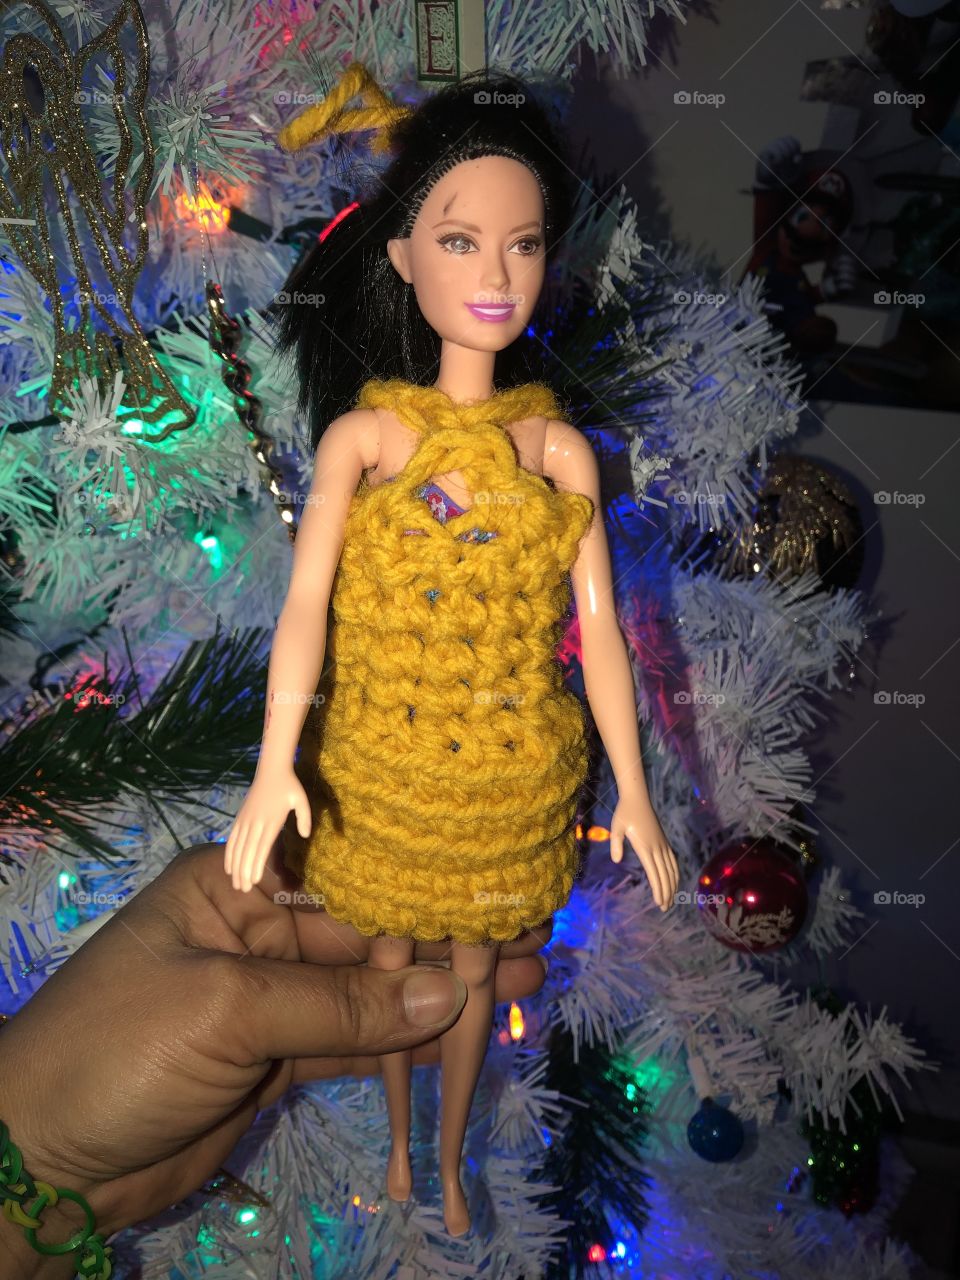 Barbie dress crocheted by #ivondabomb 